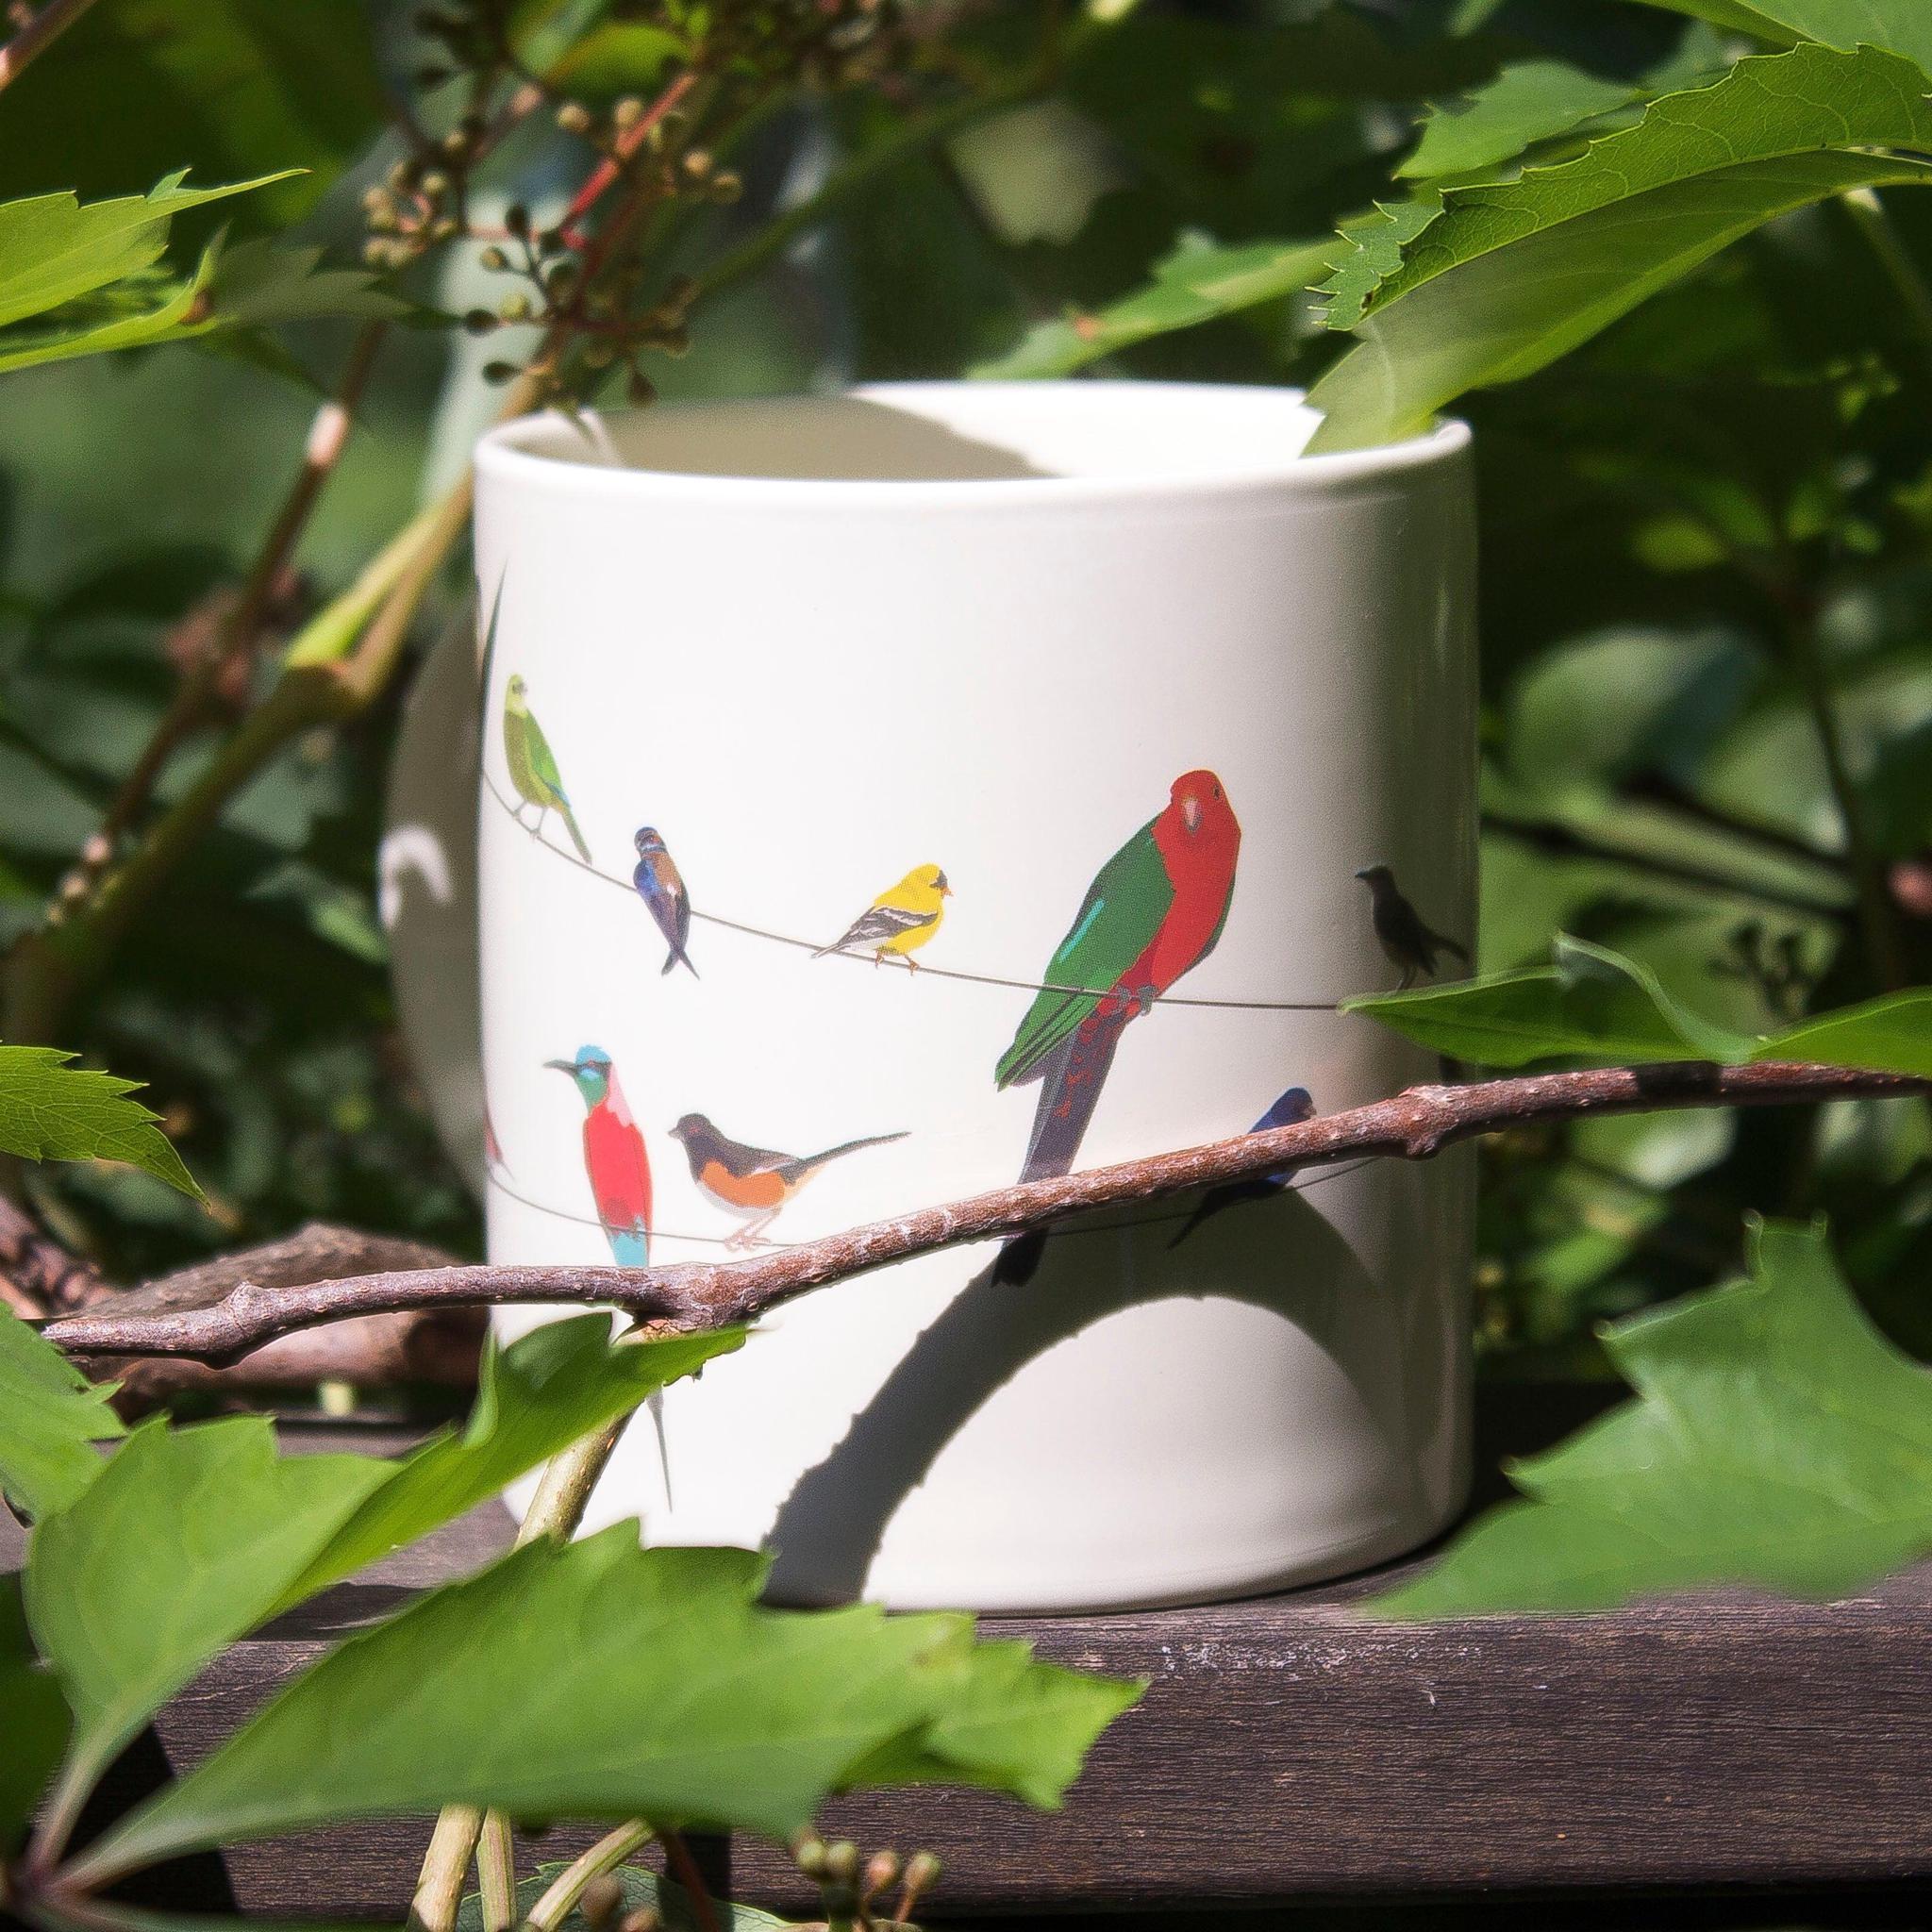 Birds on a Wire Heat-Changing Mug